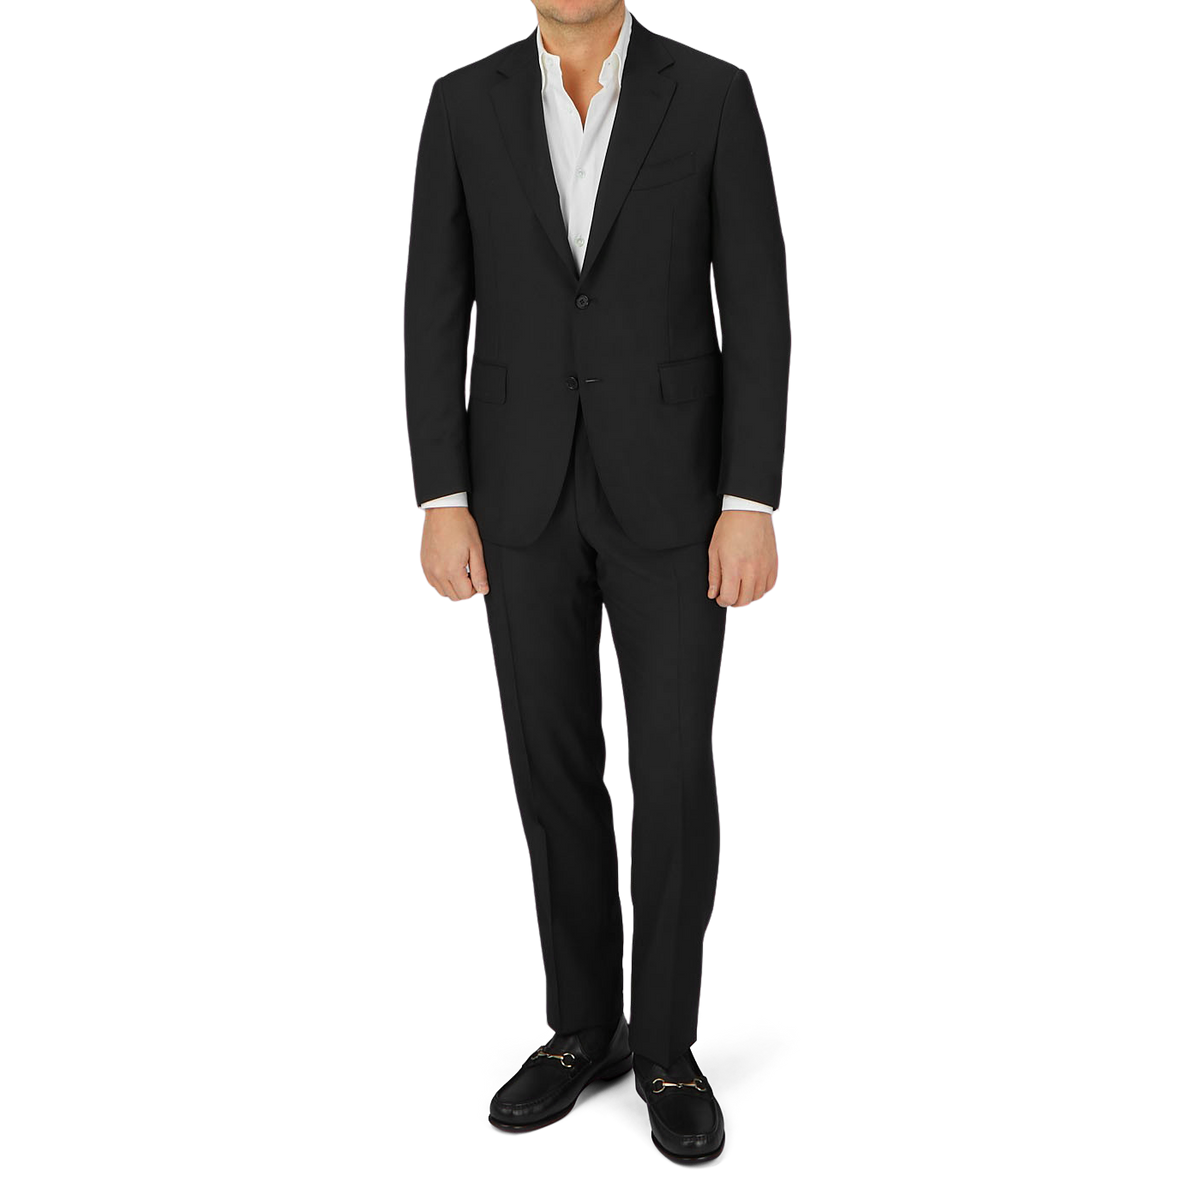 A man is posing in a Canali Black Virgin Wool Twill Suit.